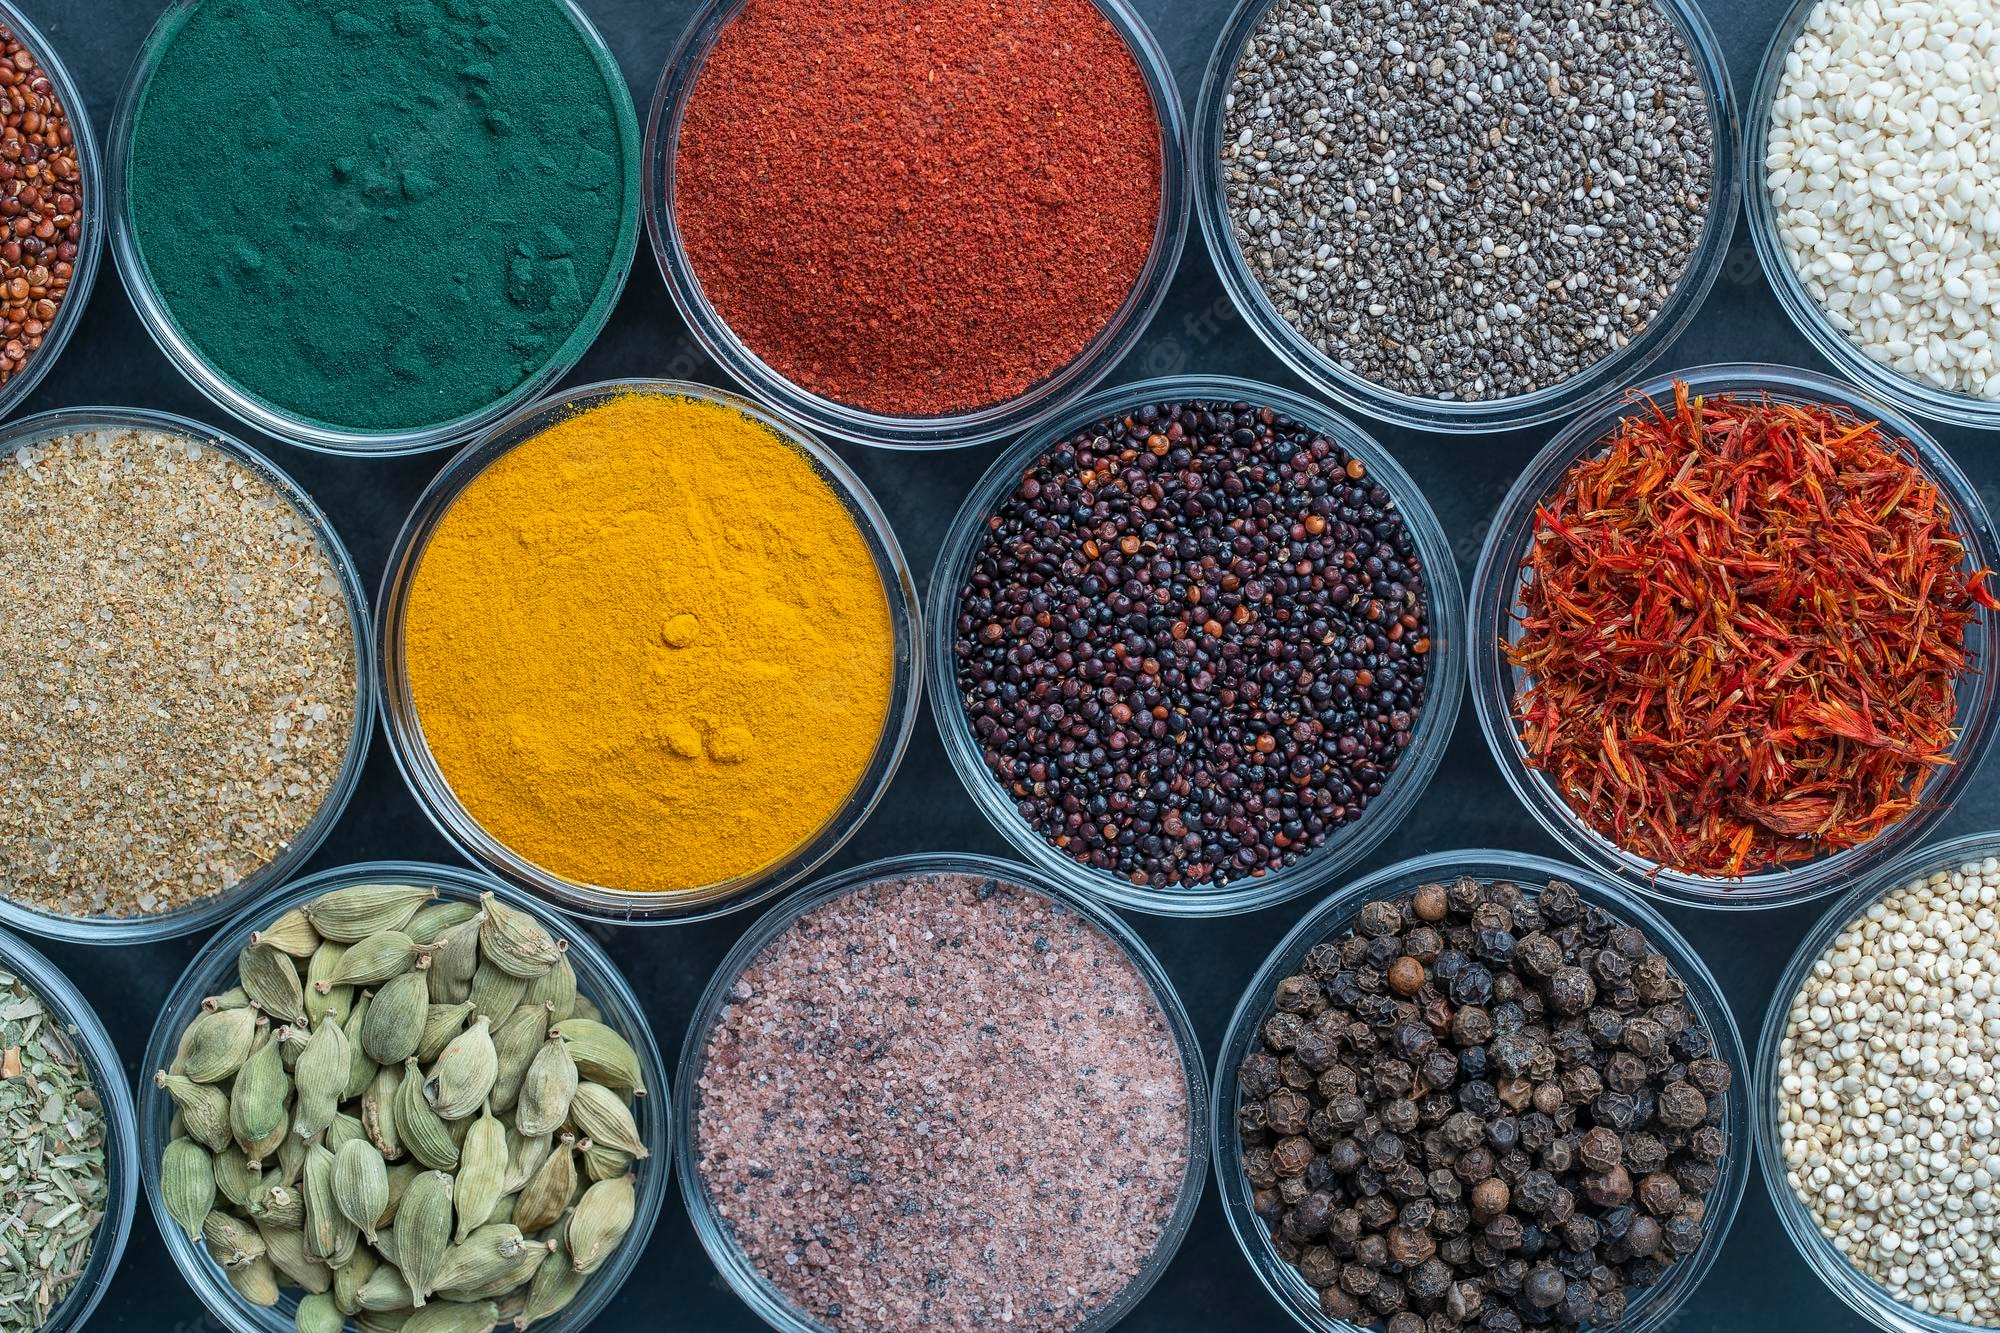 chilli powder manufacturers in india